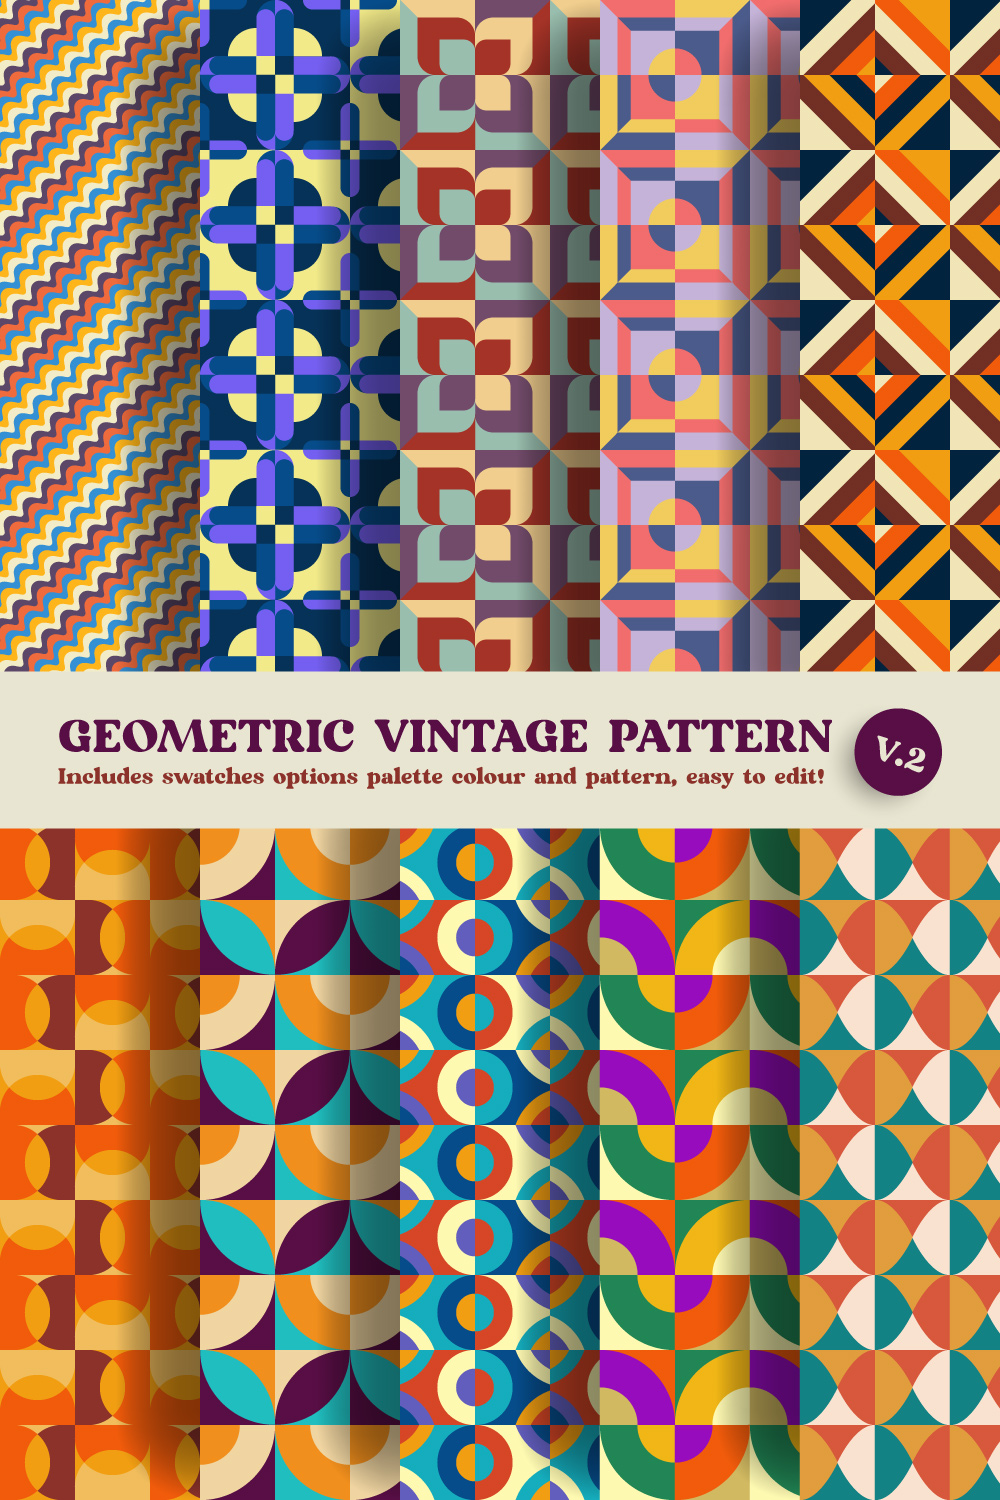 Geometric Retro Patterns Design pinterest image.